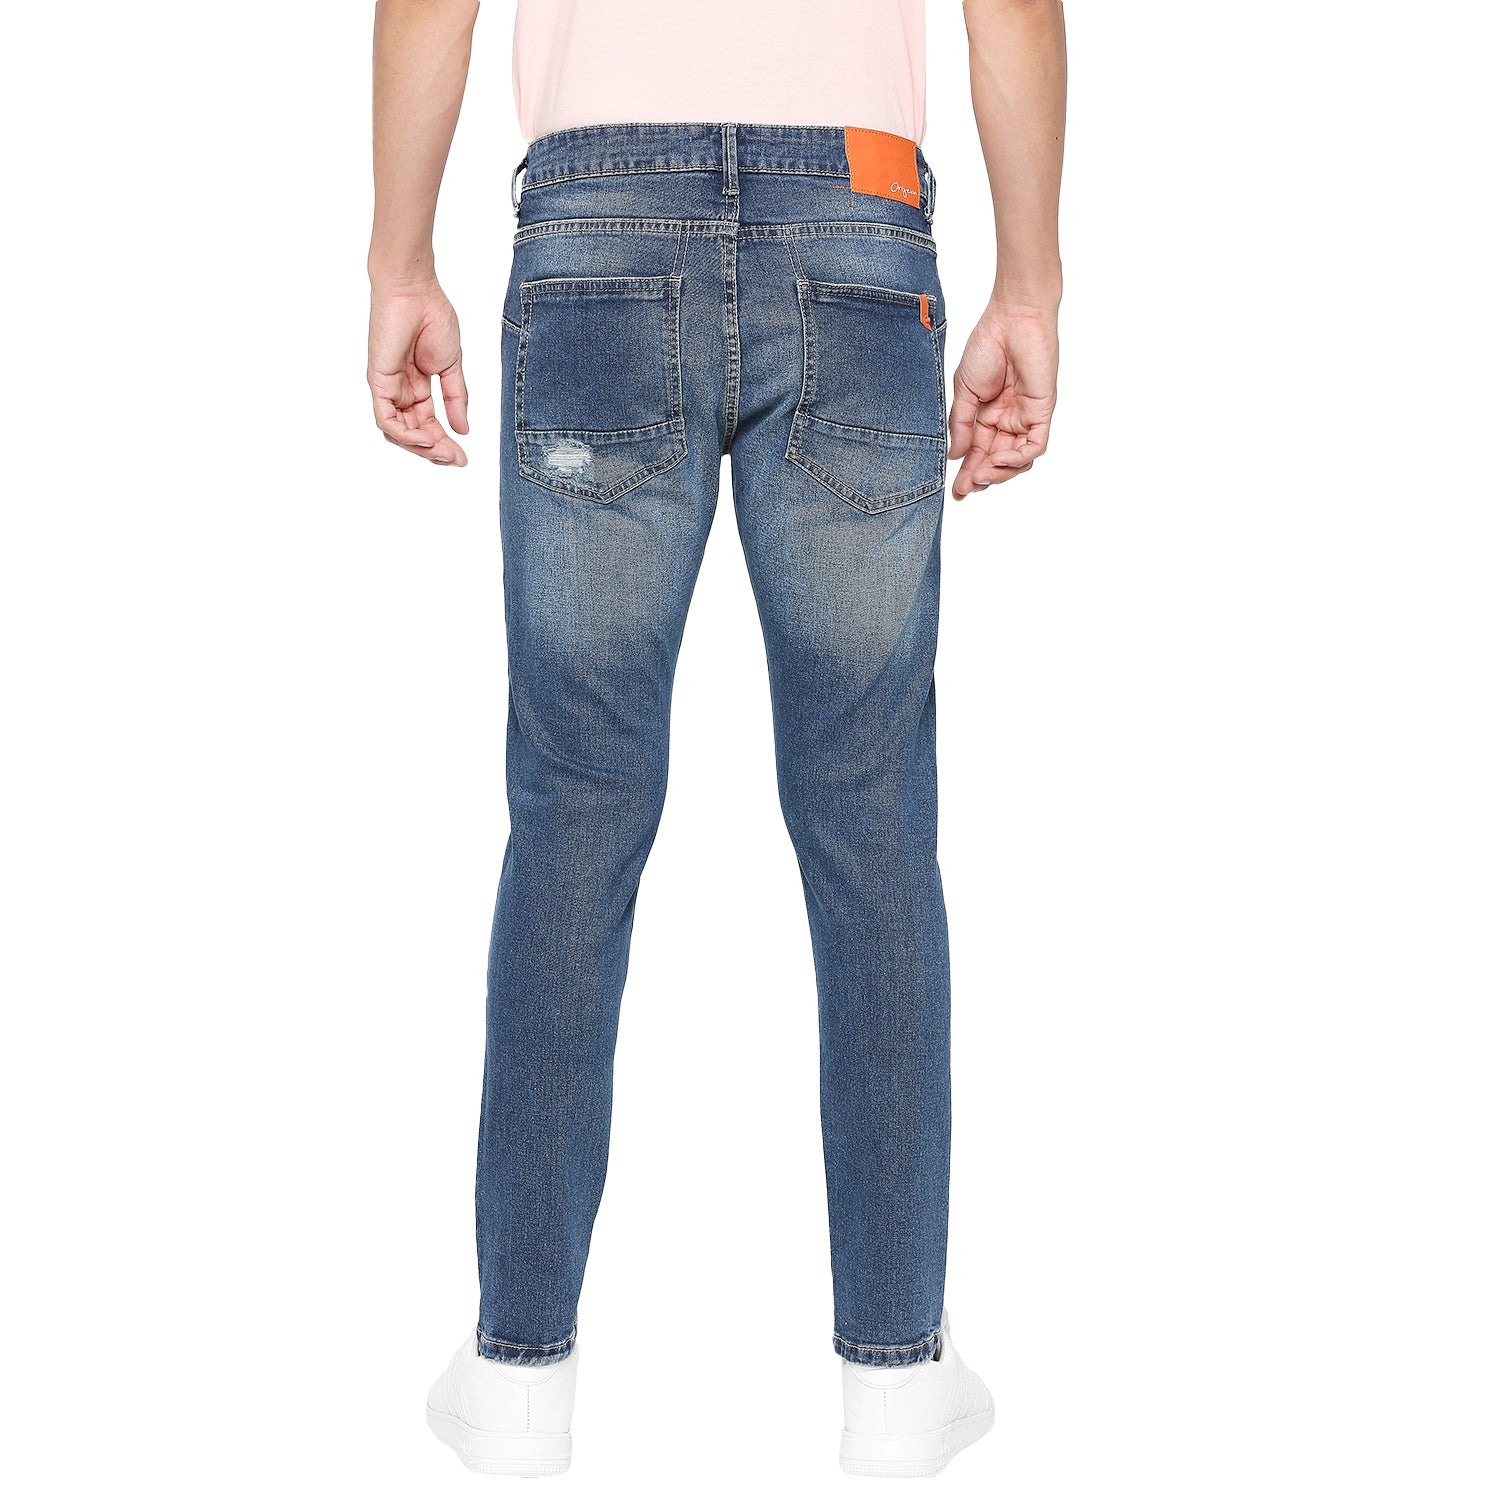 Blue Patched Jeans Slim Fit Mens Jeans AY450 Streetwear Mens Jeans |  Sneakerjeans